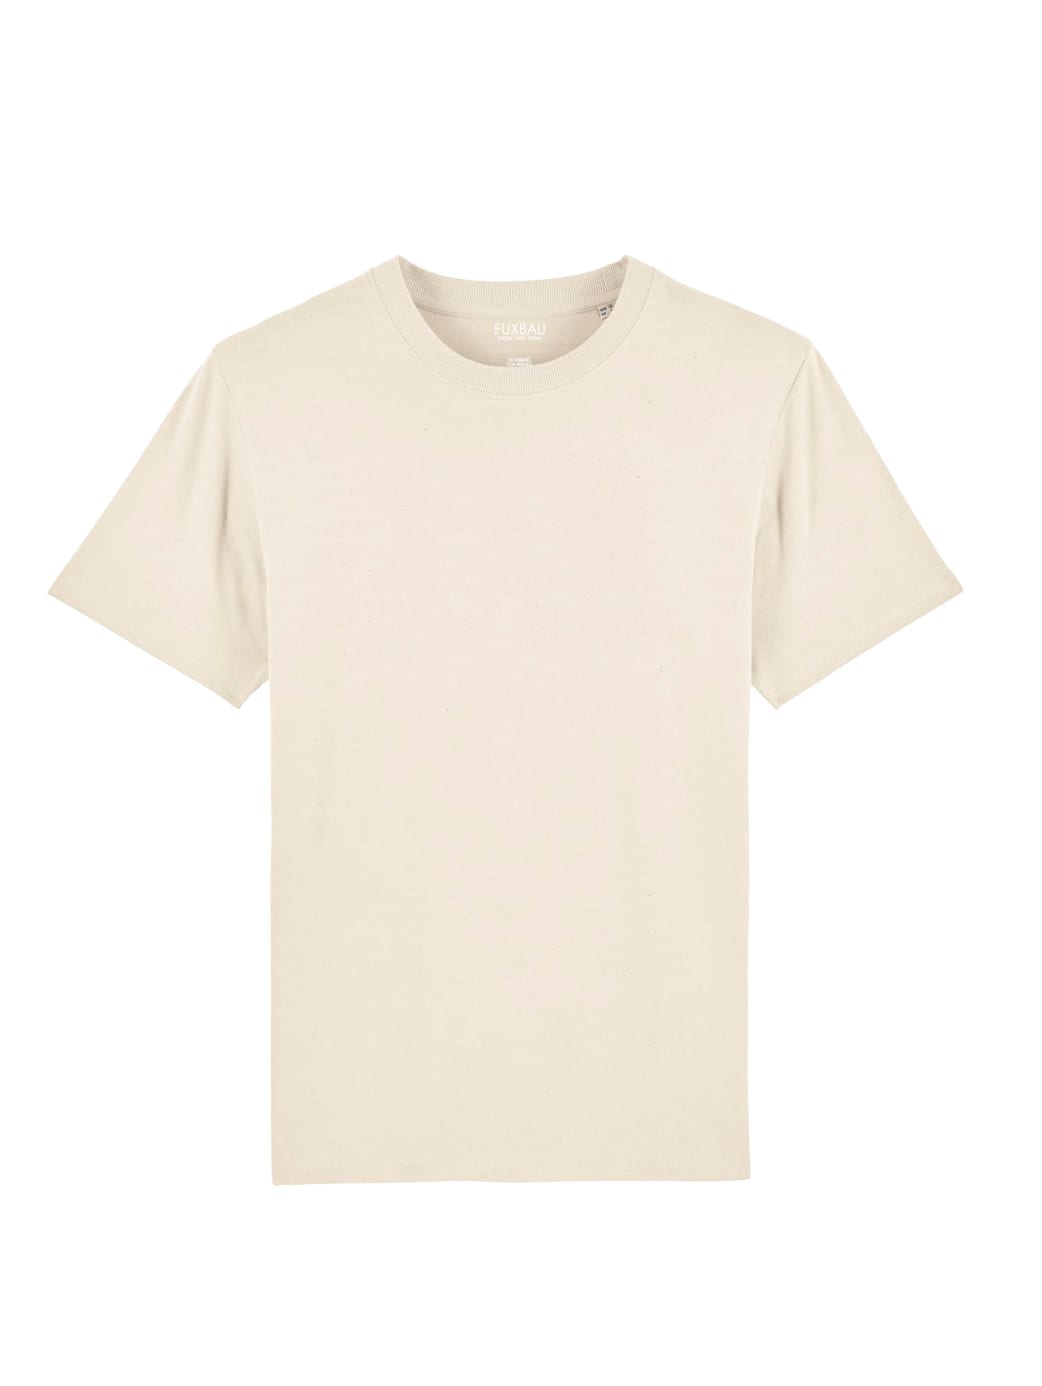 FUXBAU Standard Basic T-Shirt in natur aus 100% Biobaumwolle.